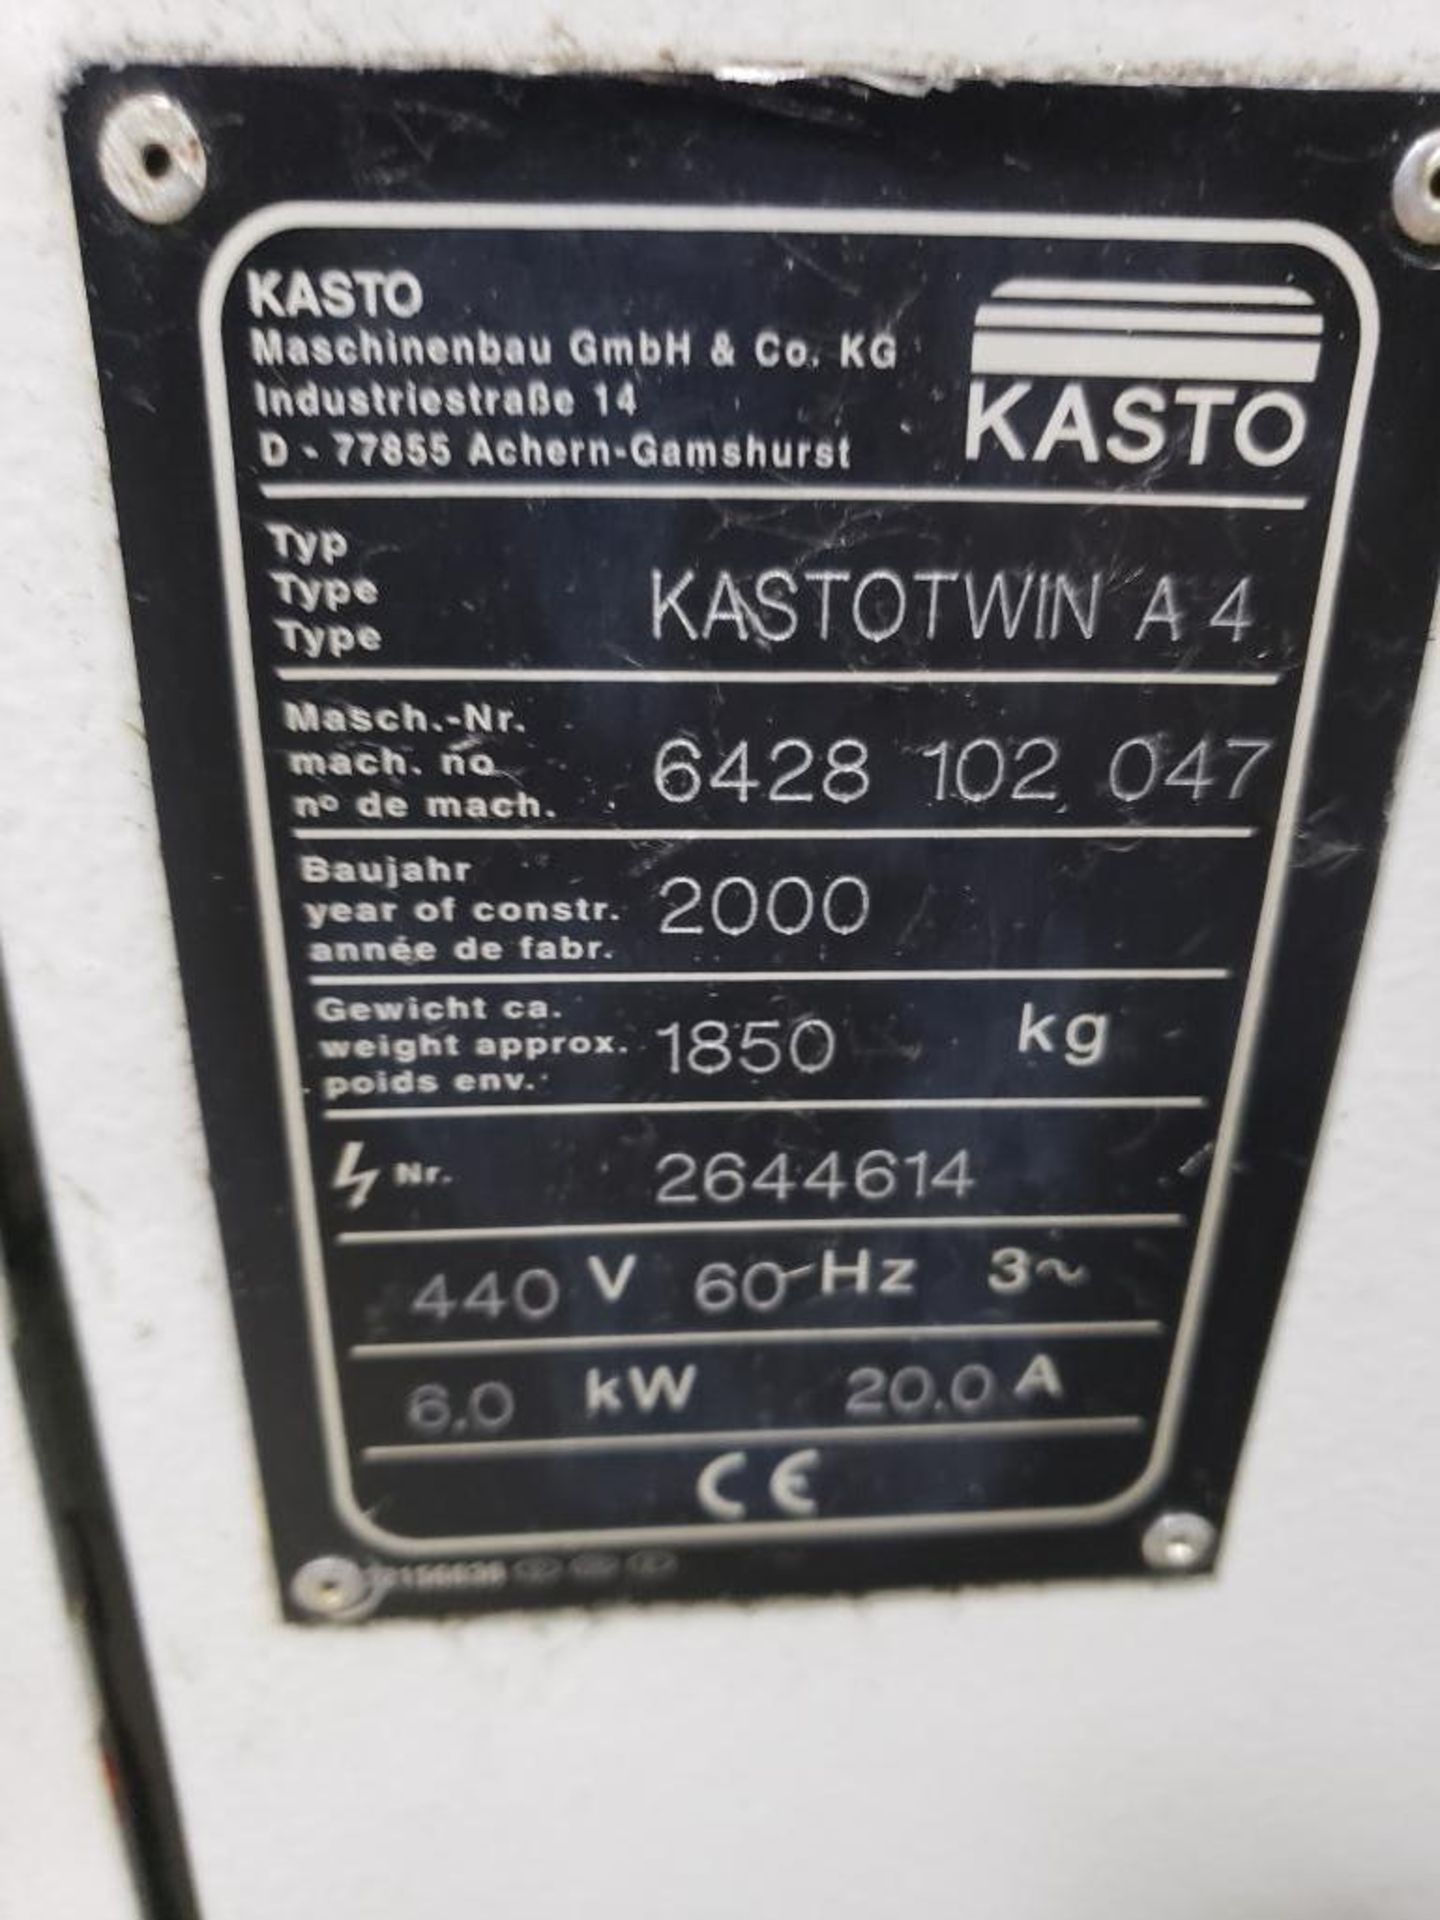 Kasto horizontal CNC band saw Model Kastotwin A4, 3 phase 440v, Mfg year 2000. Serial # 6428102047. - Bild 18 aus 32